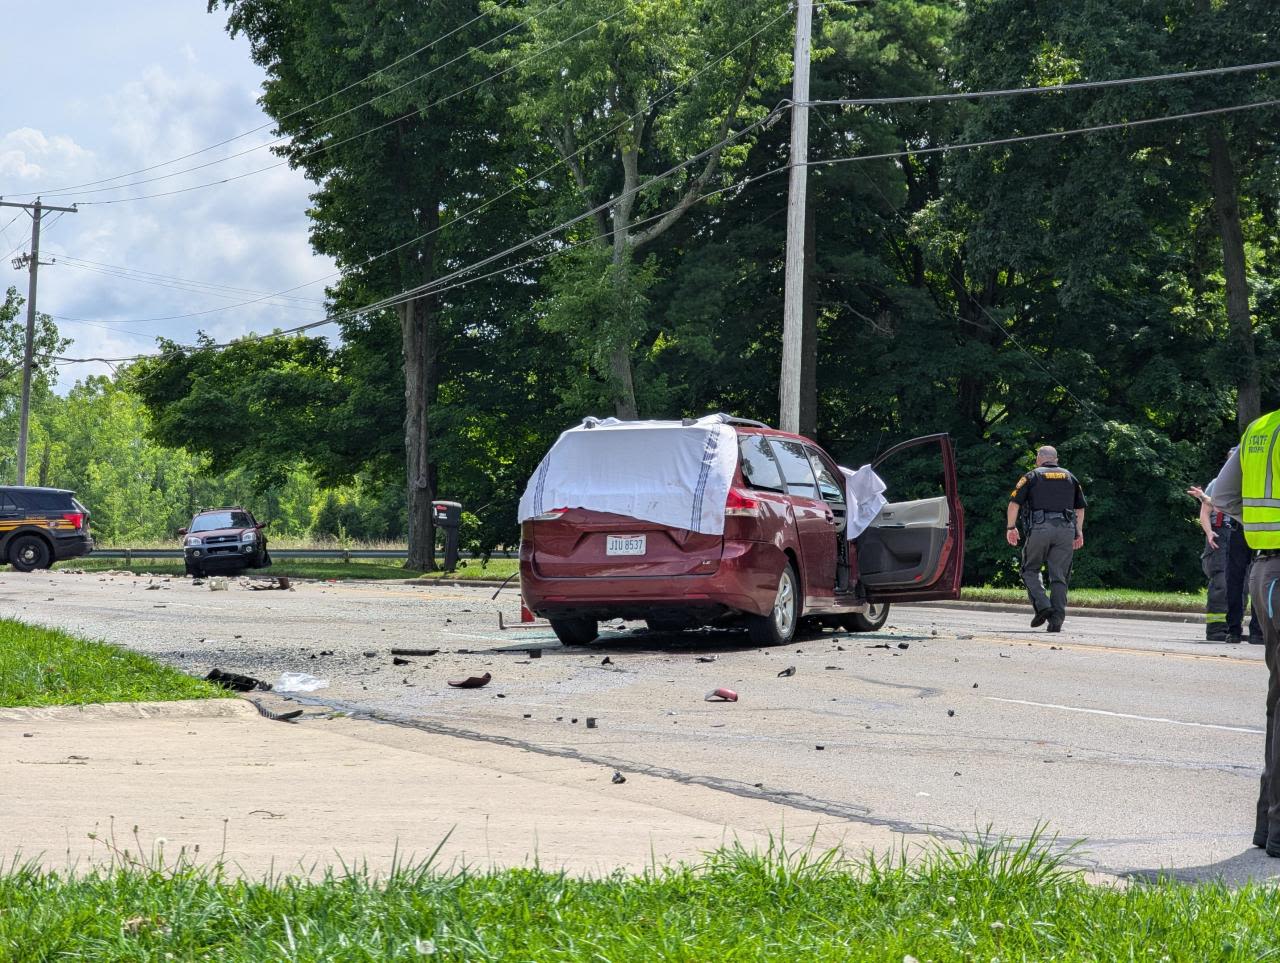 3-vehicle crash in Springfield involving township ambulance turns fatal